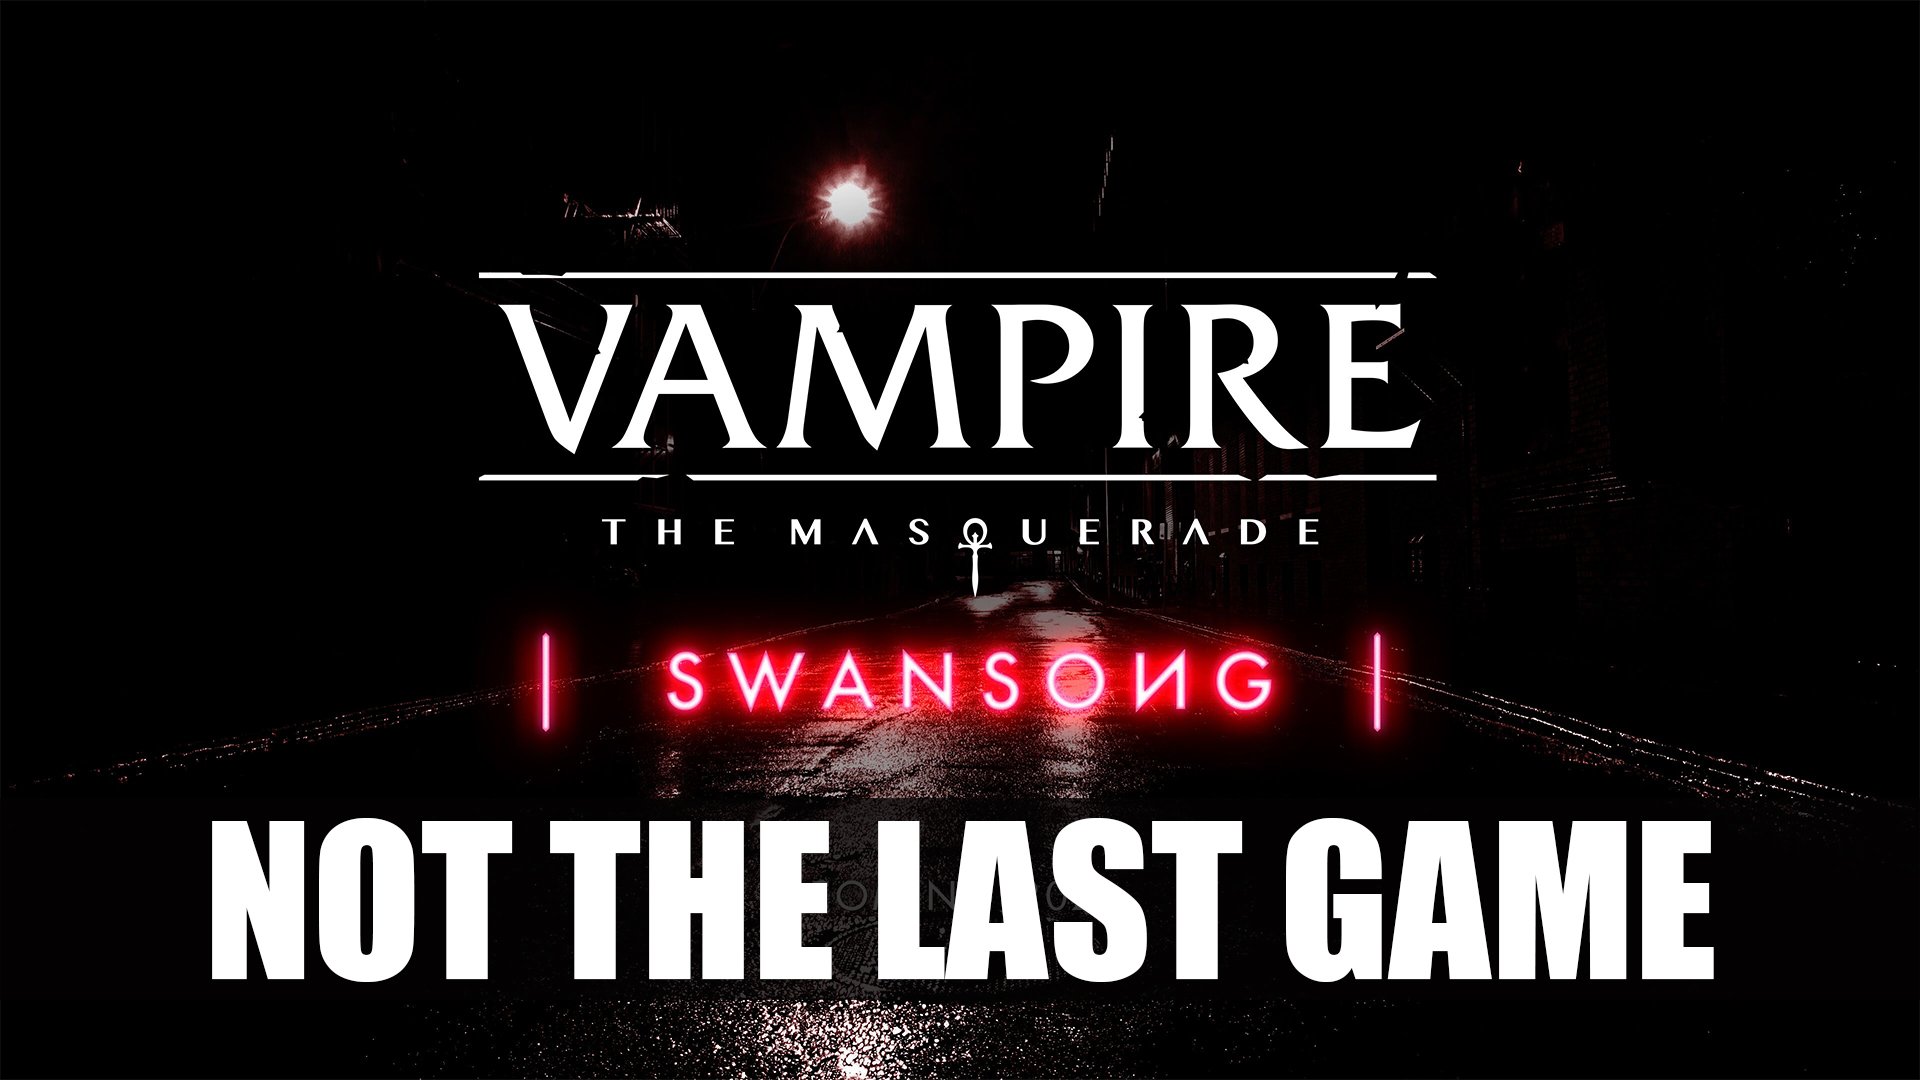 Vampire: The Masquerade — Bloodlines 2 writers on reinvigorating a